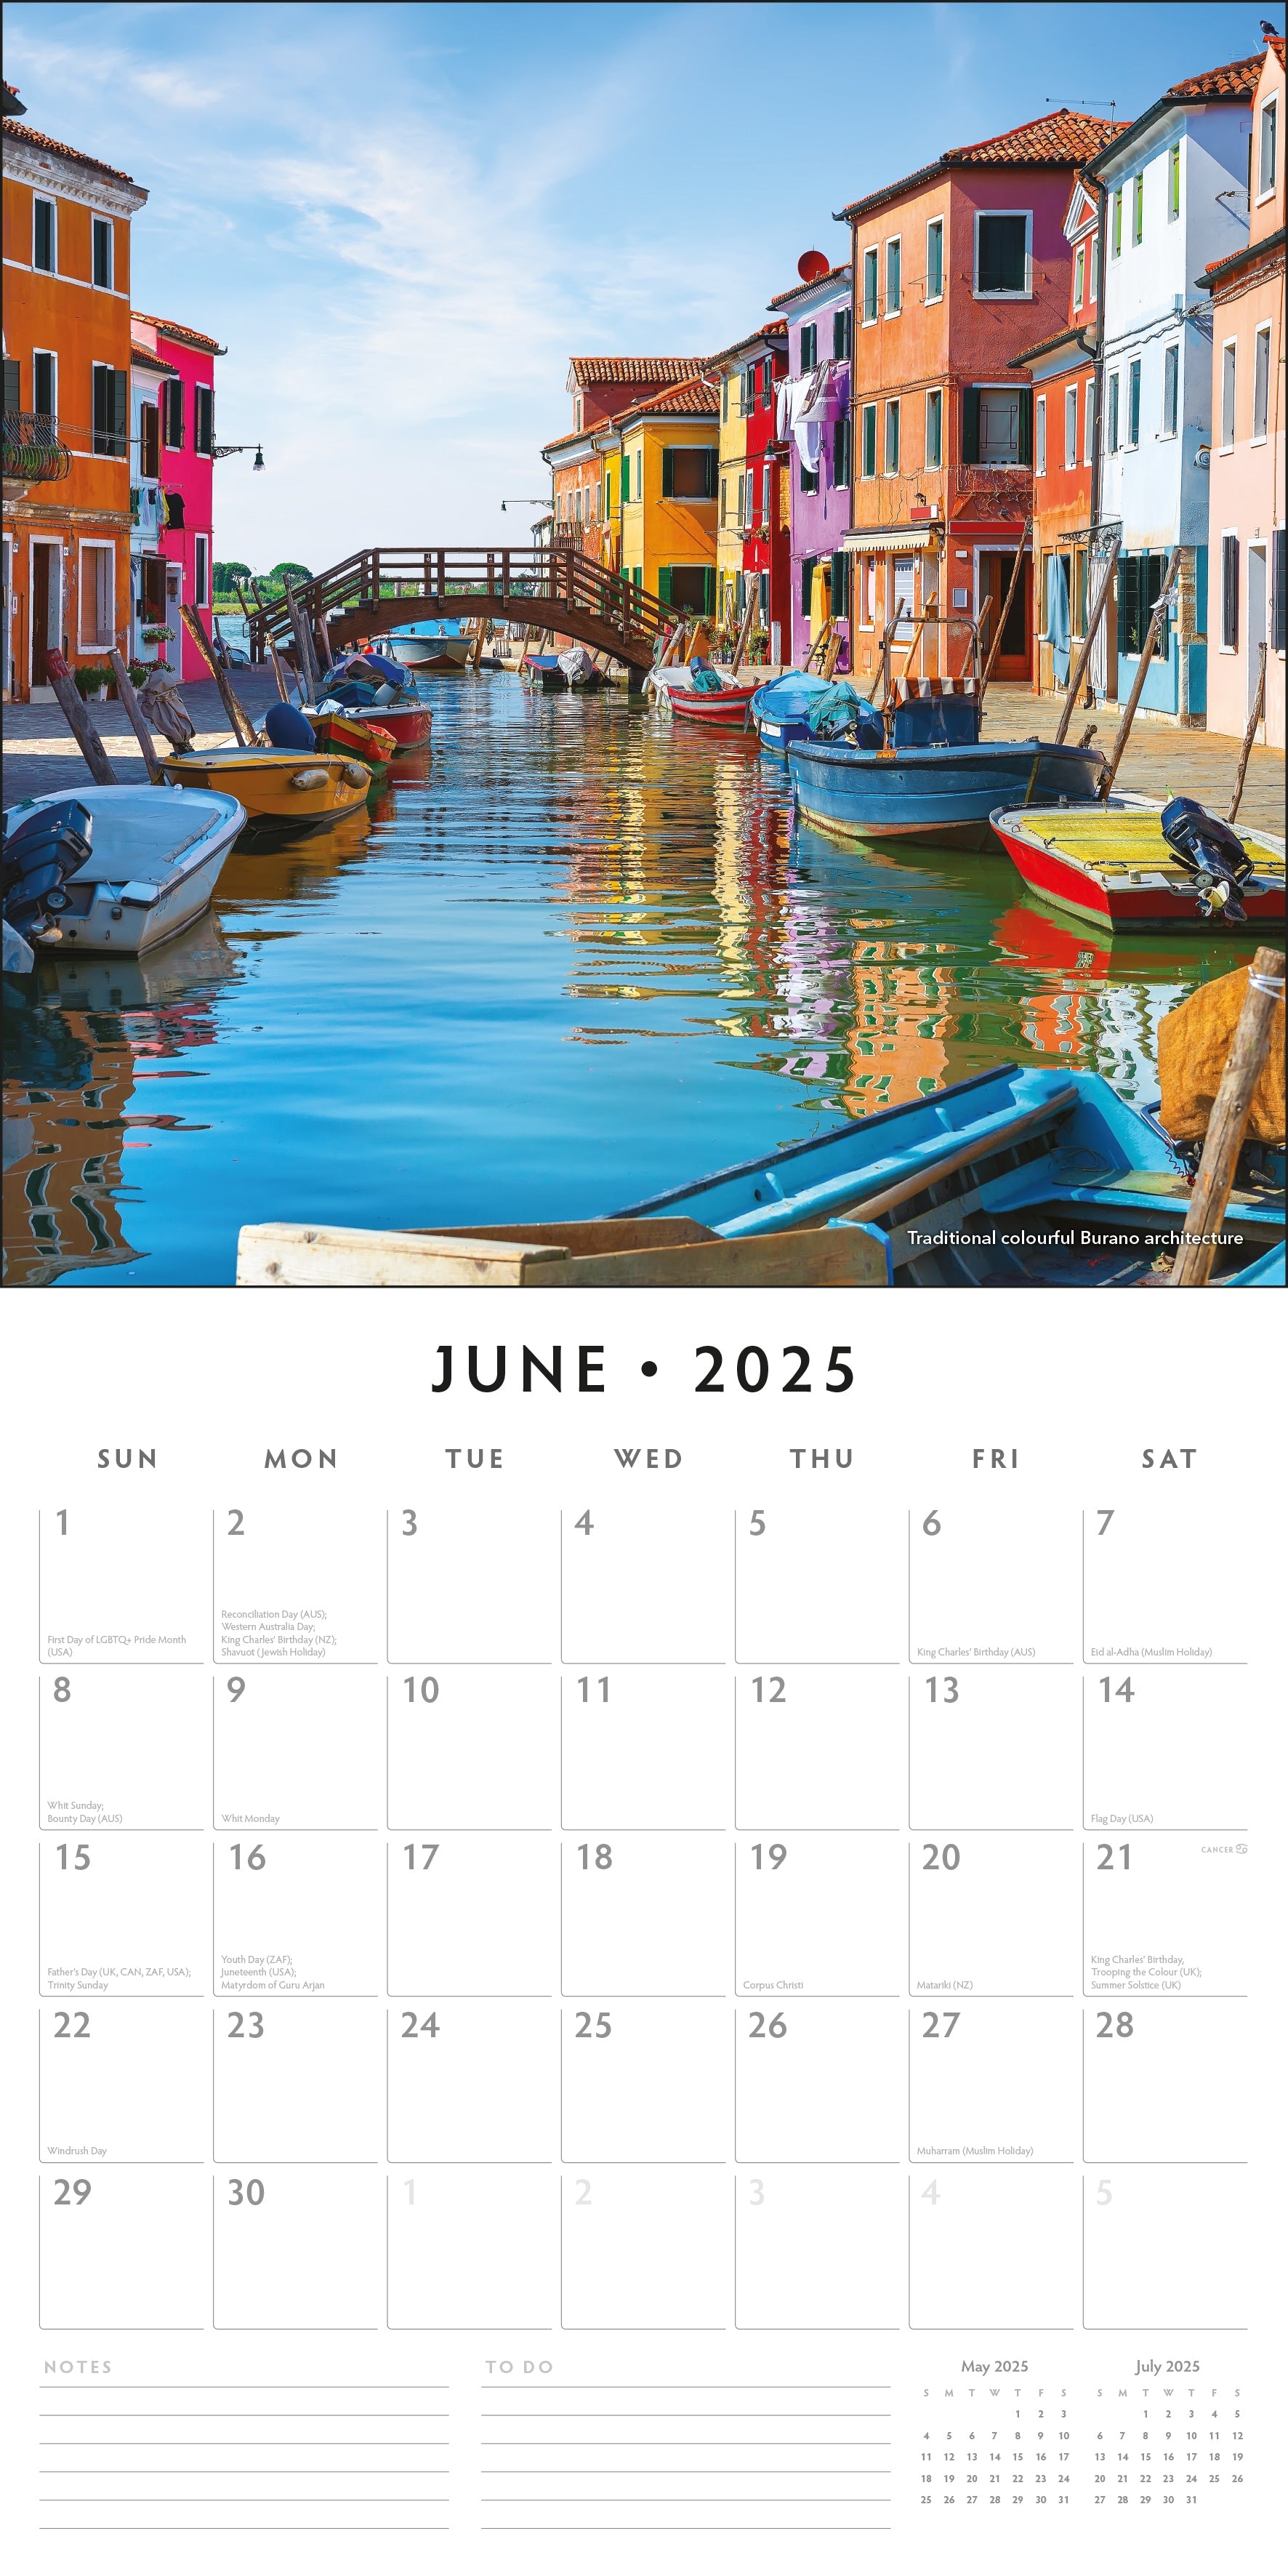 2025 Venice - Square Wall Calendar